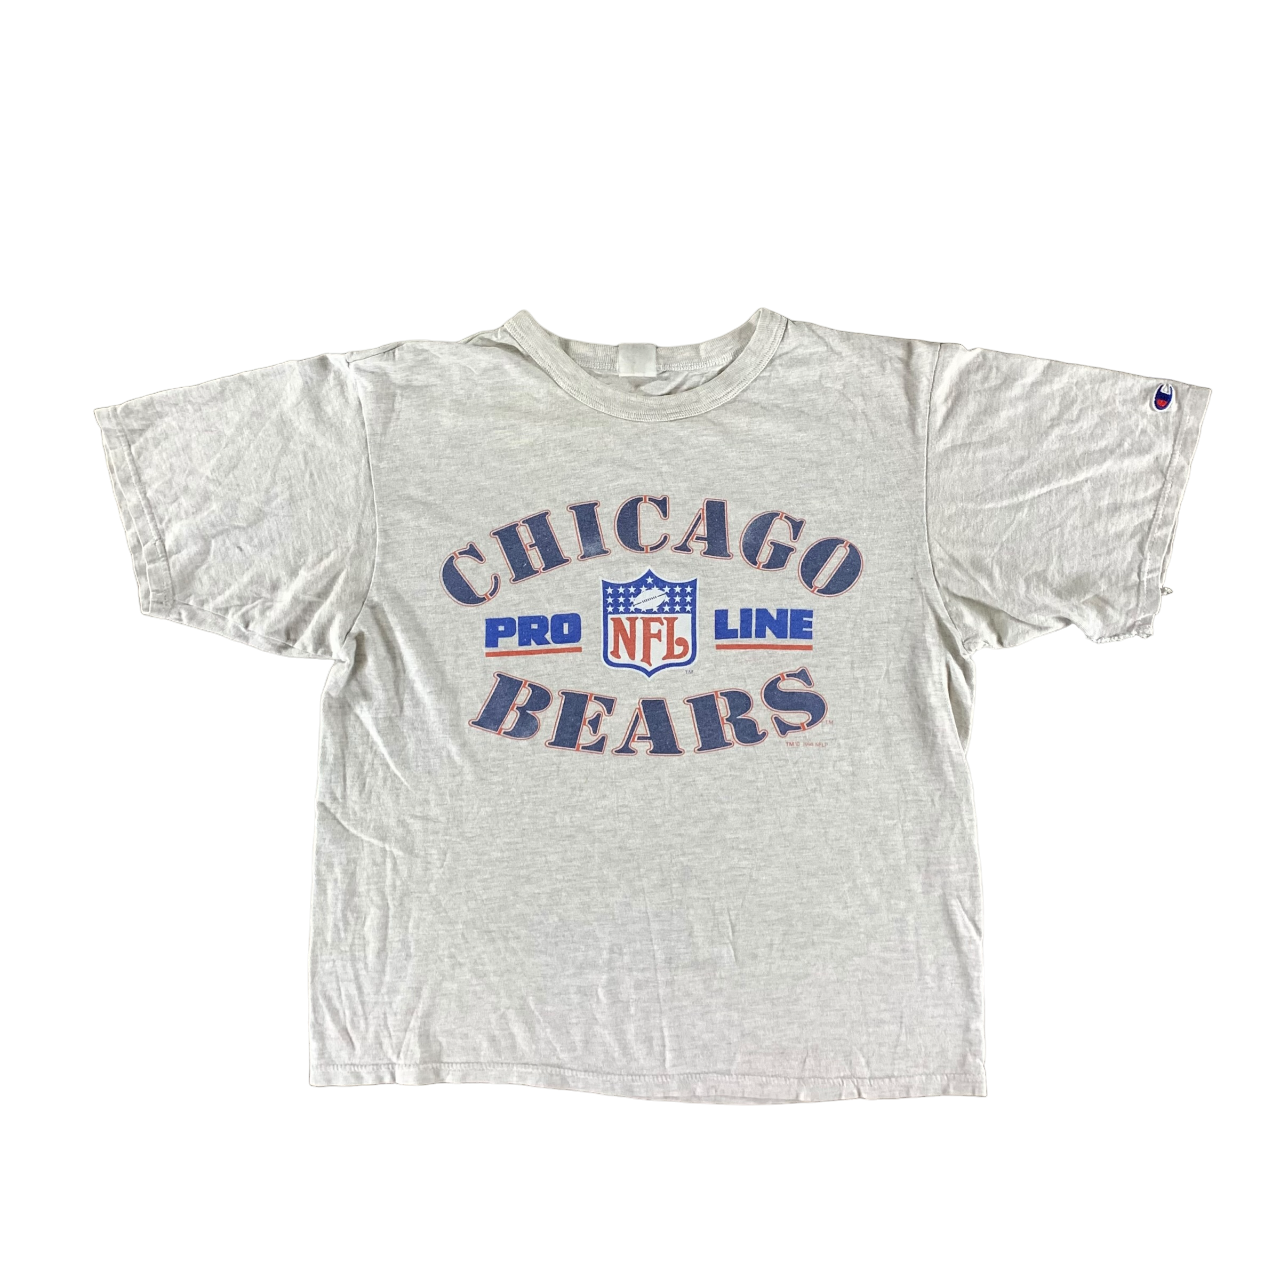 Vintage 1994 Chicago Bears T-shirt size Large